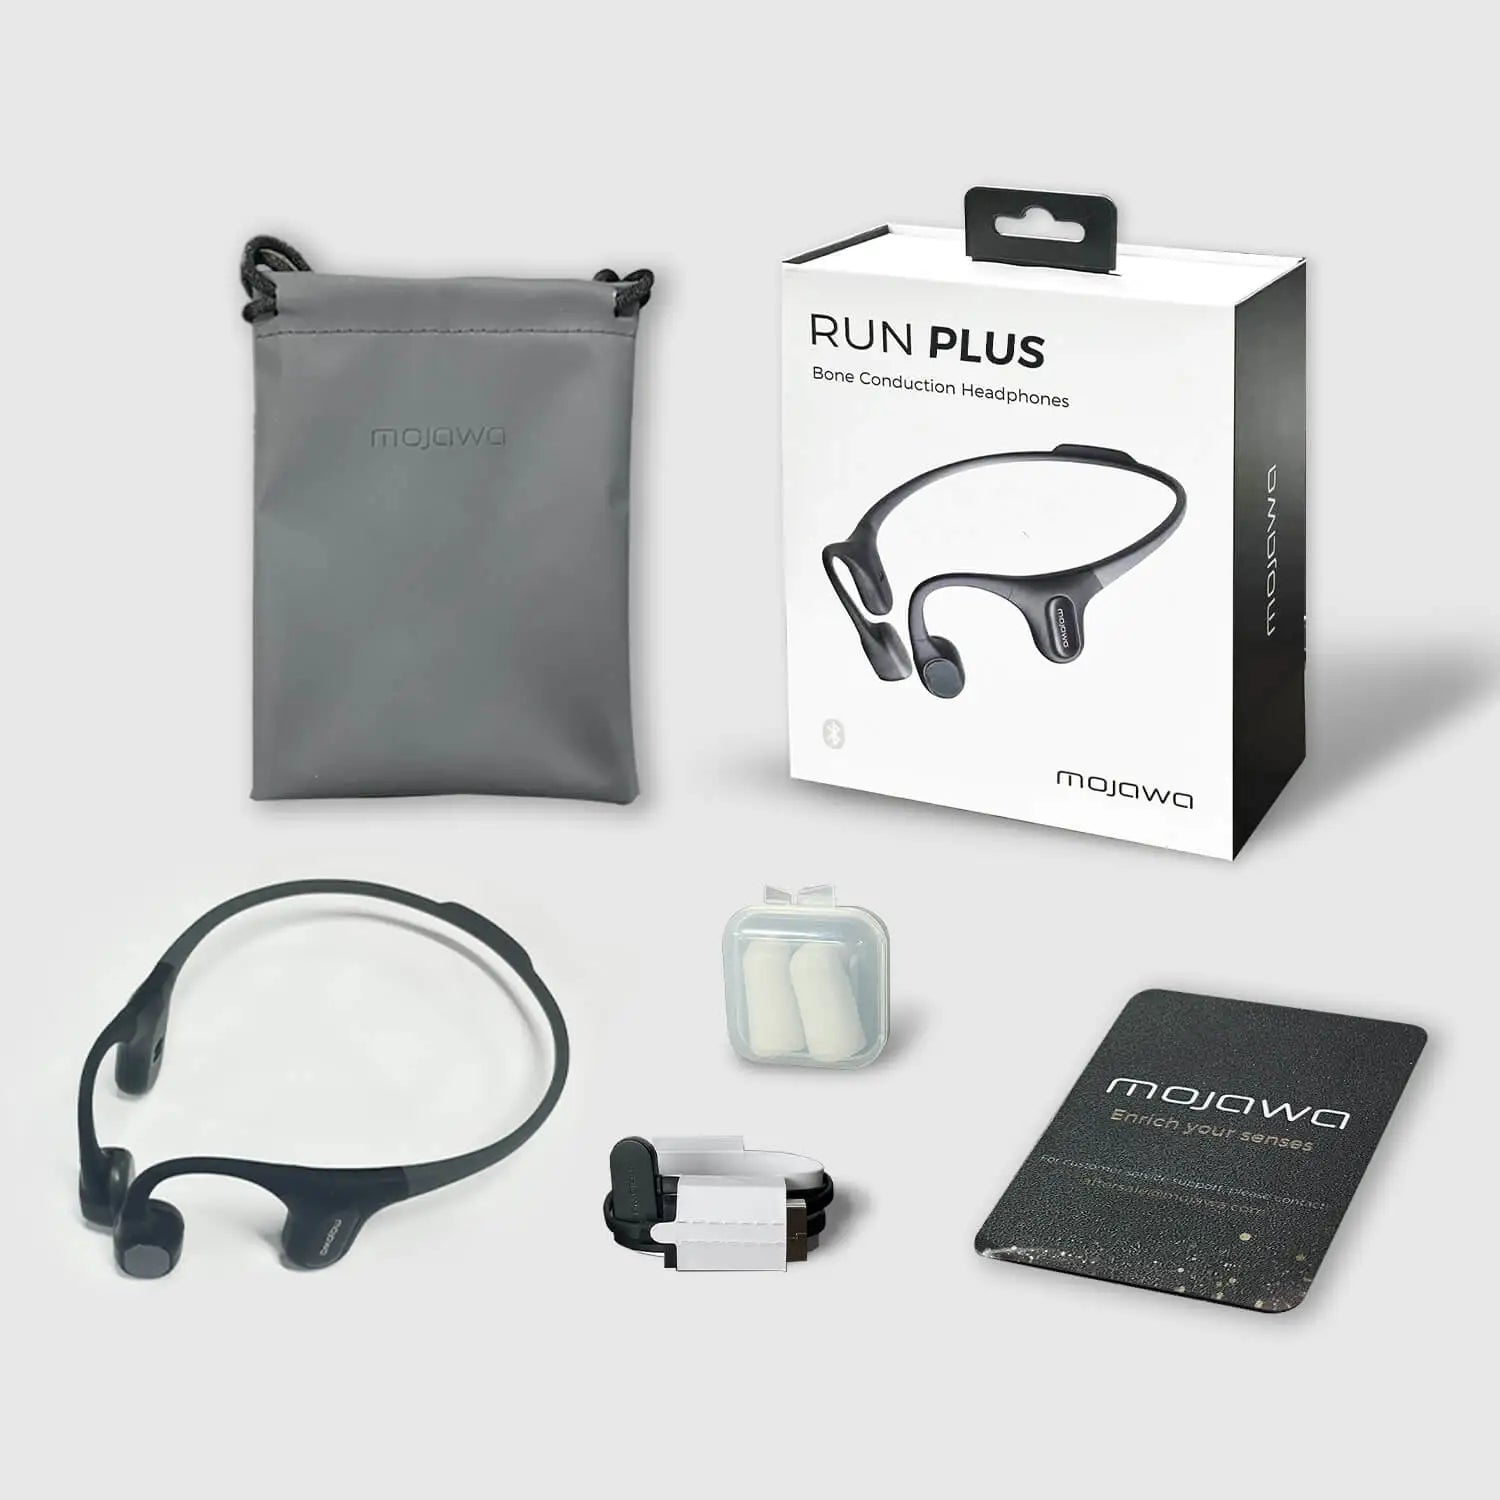 mojawa-runplus-headphones-packaging-inventory